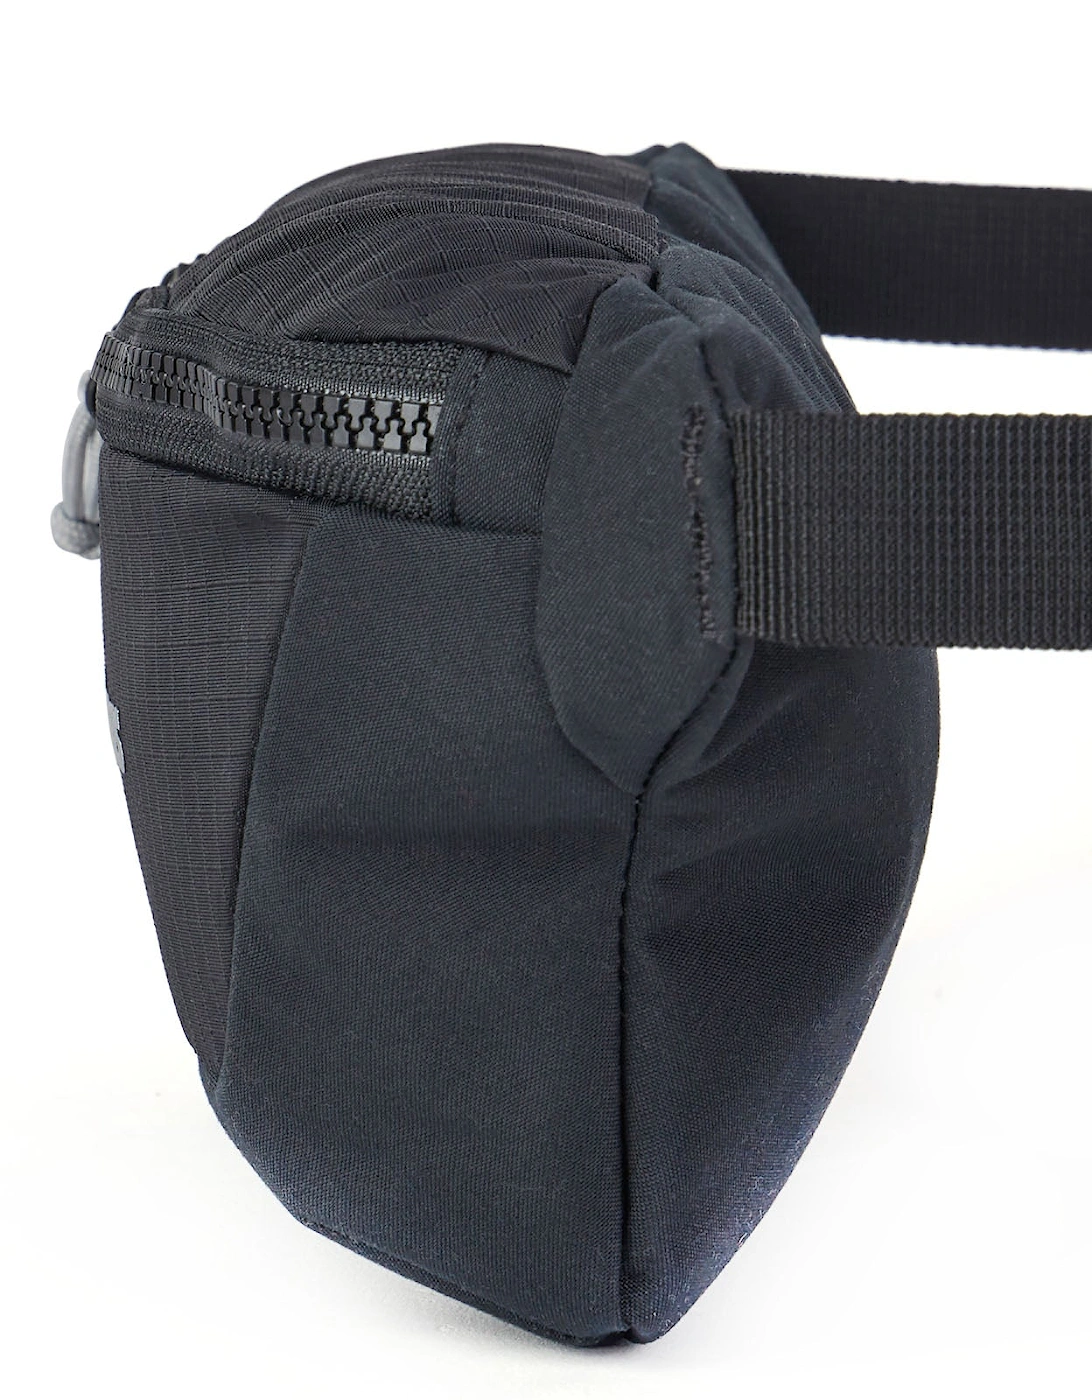 Caryall 2.5L Walking Adjustable Waist Bum Bag - Black - OS